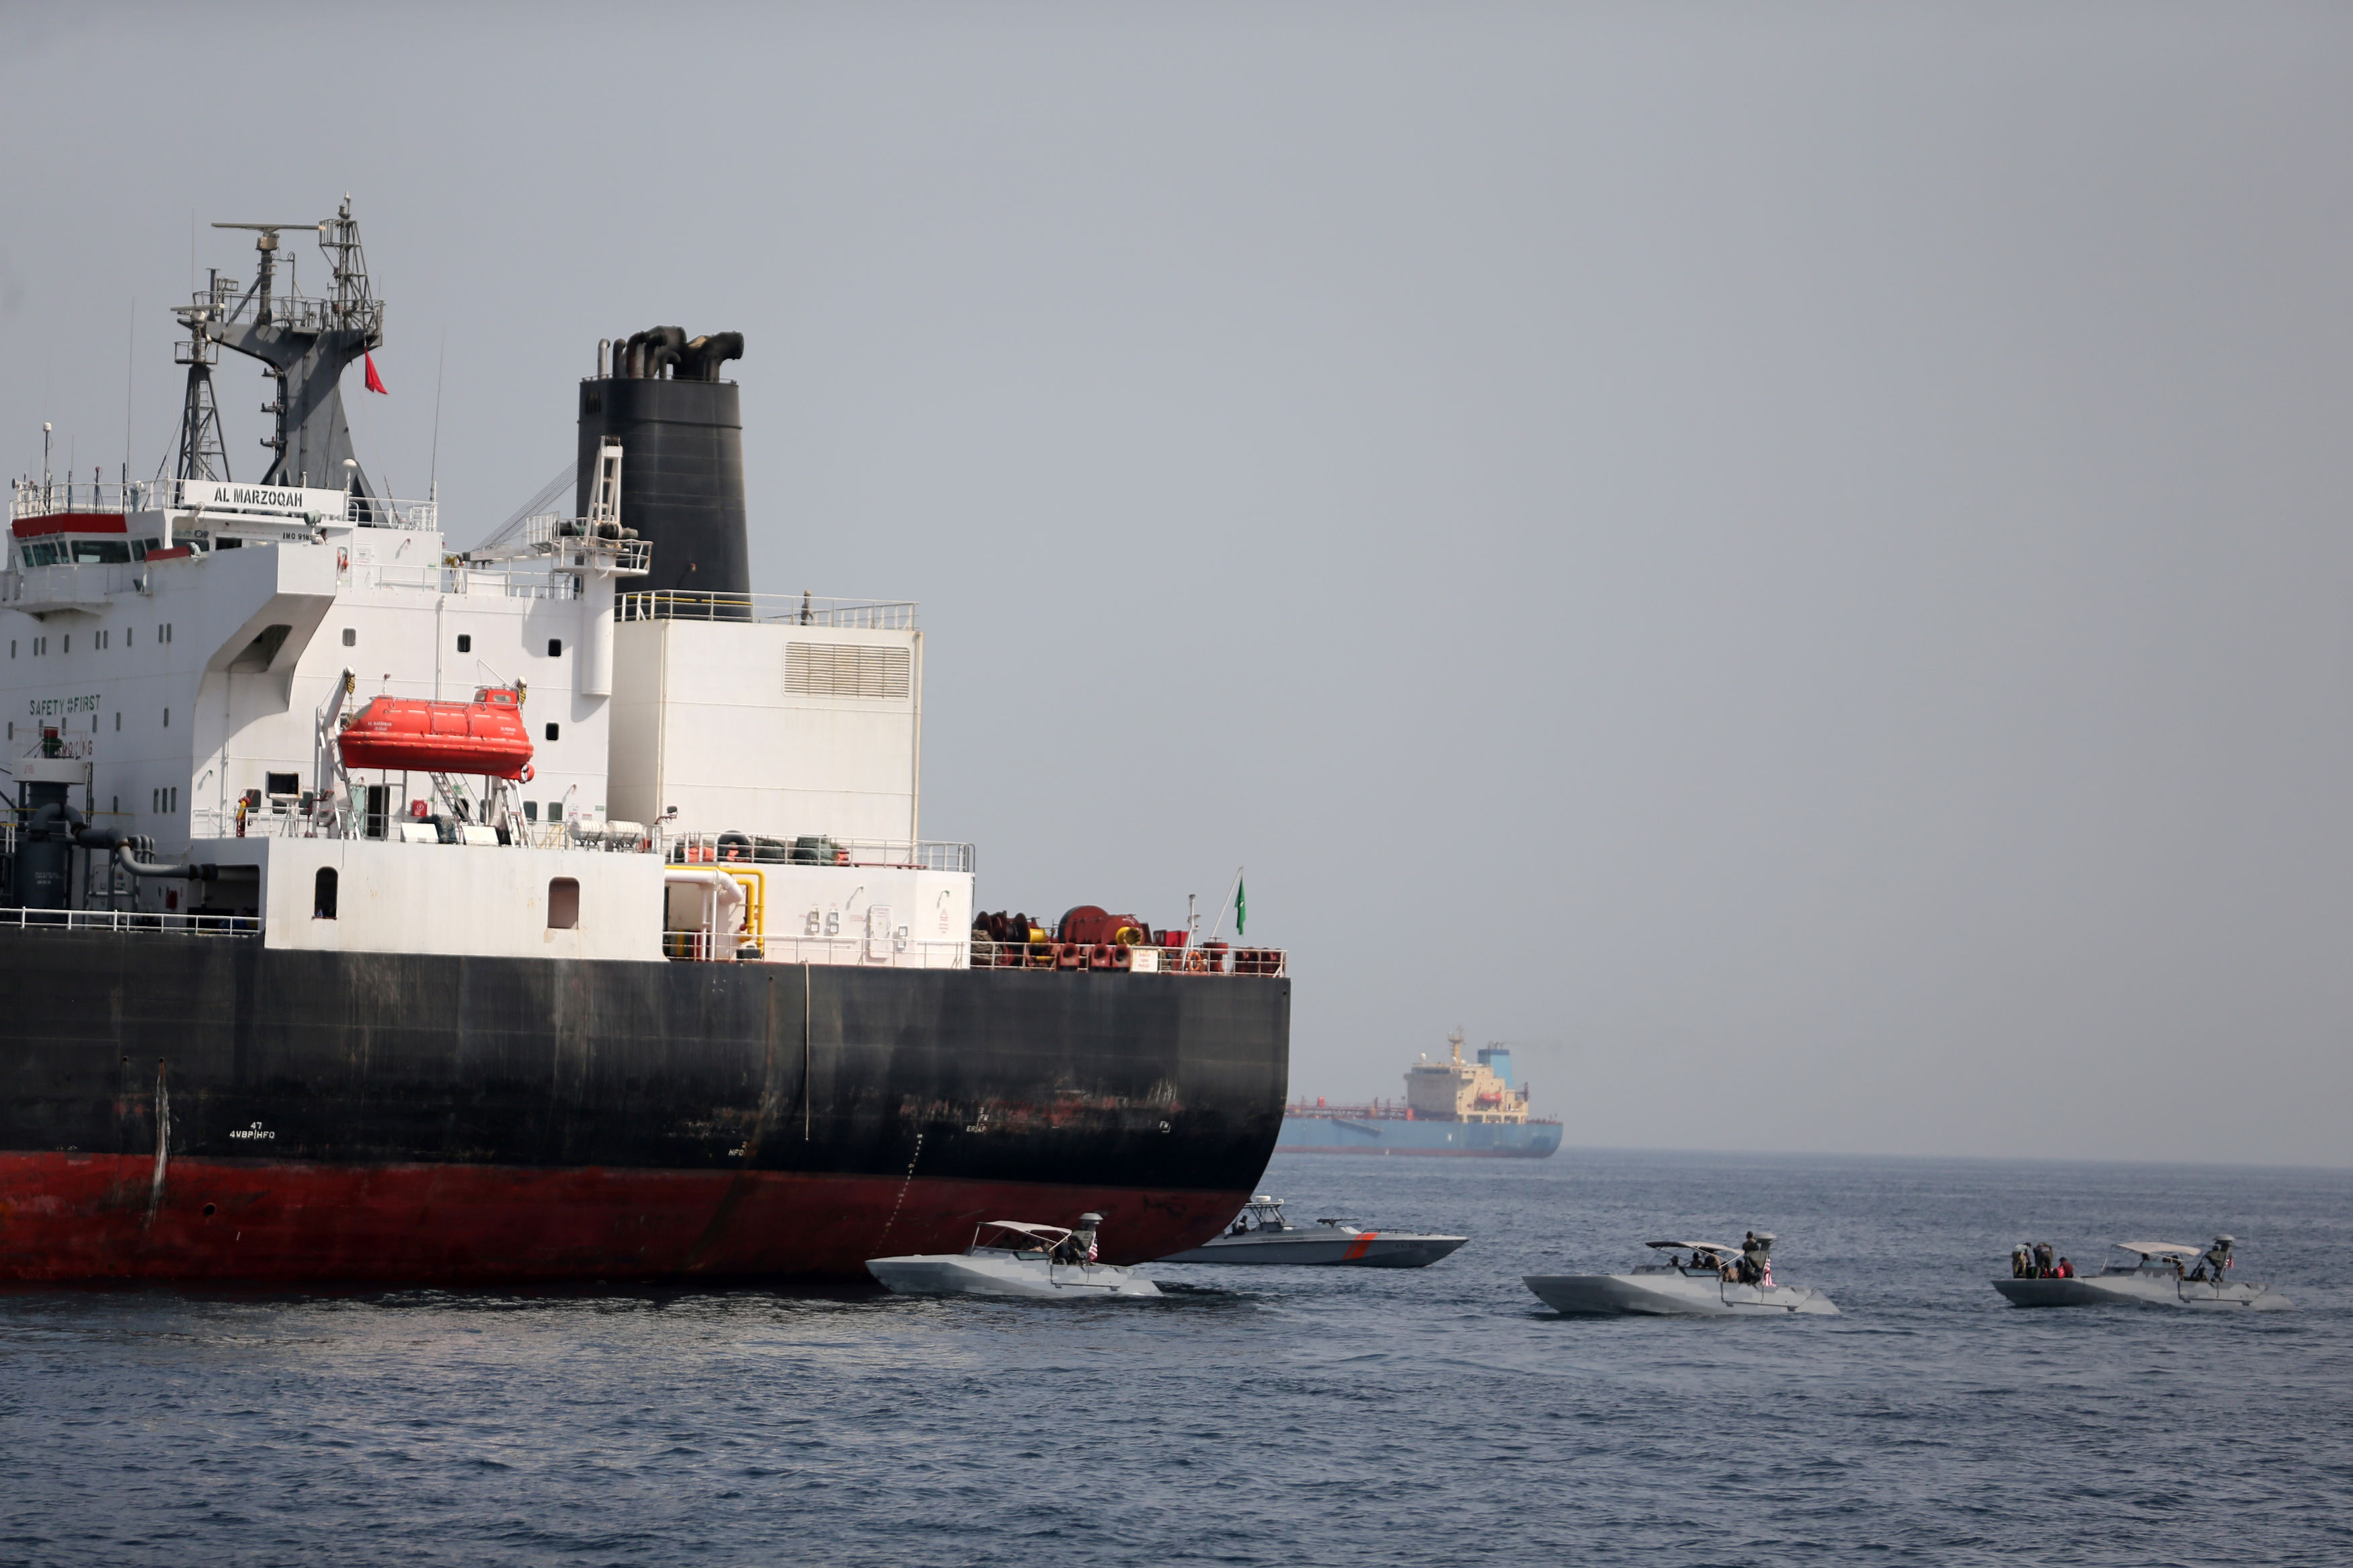 UAE Navy boats are seen next to Al Marzoqah, Saudi Arabian tanker, off the Port of Fujairah